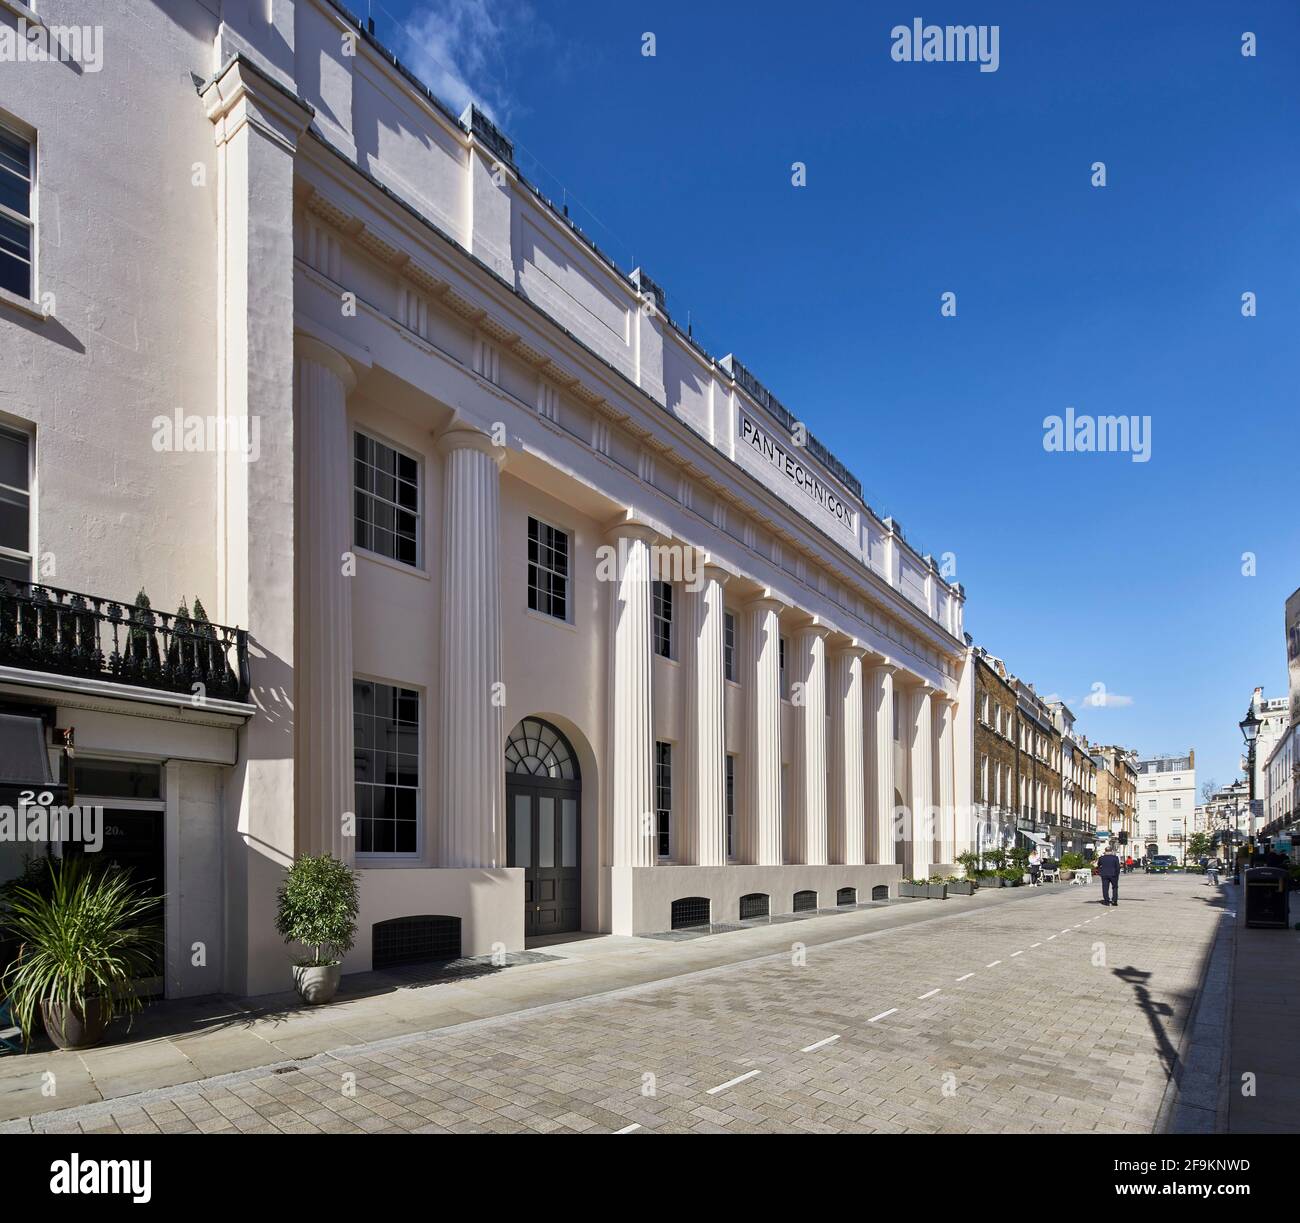 Exterior in daylight. Pantechnicon, London, United Kingdom. Architect: Farrells, 2020. Stock Photo